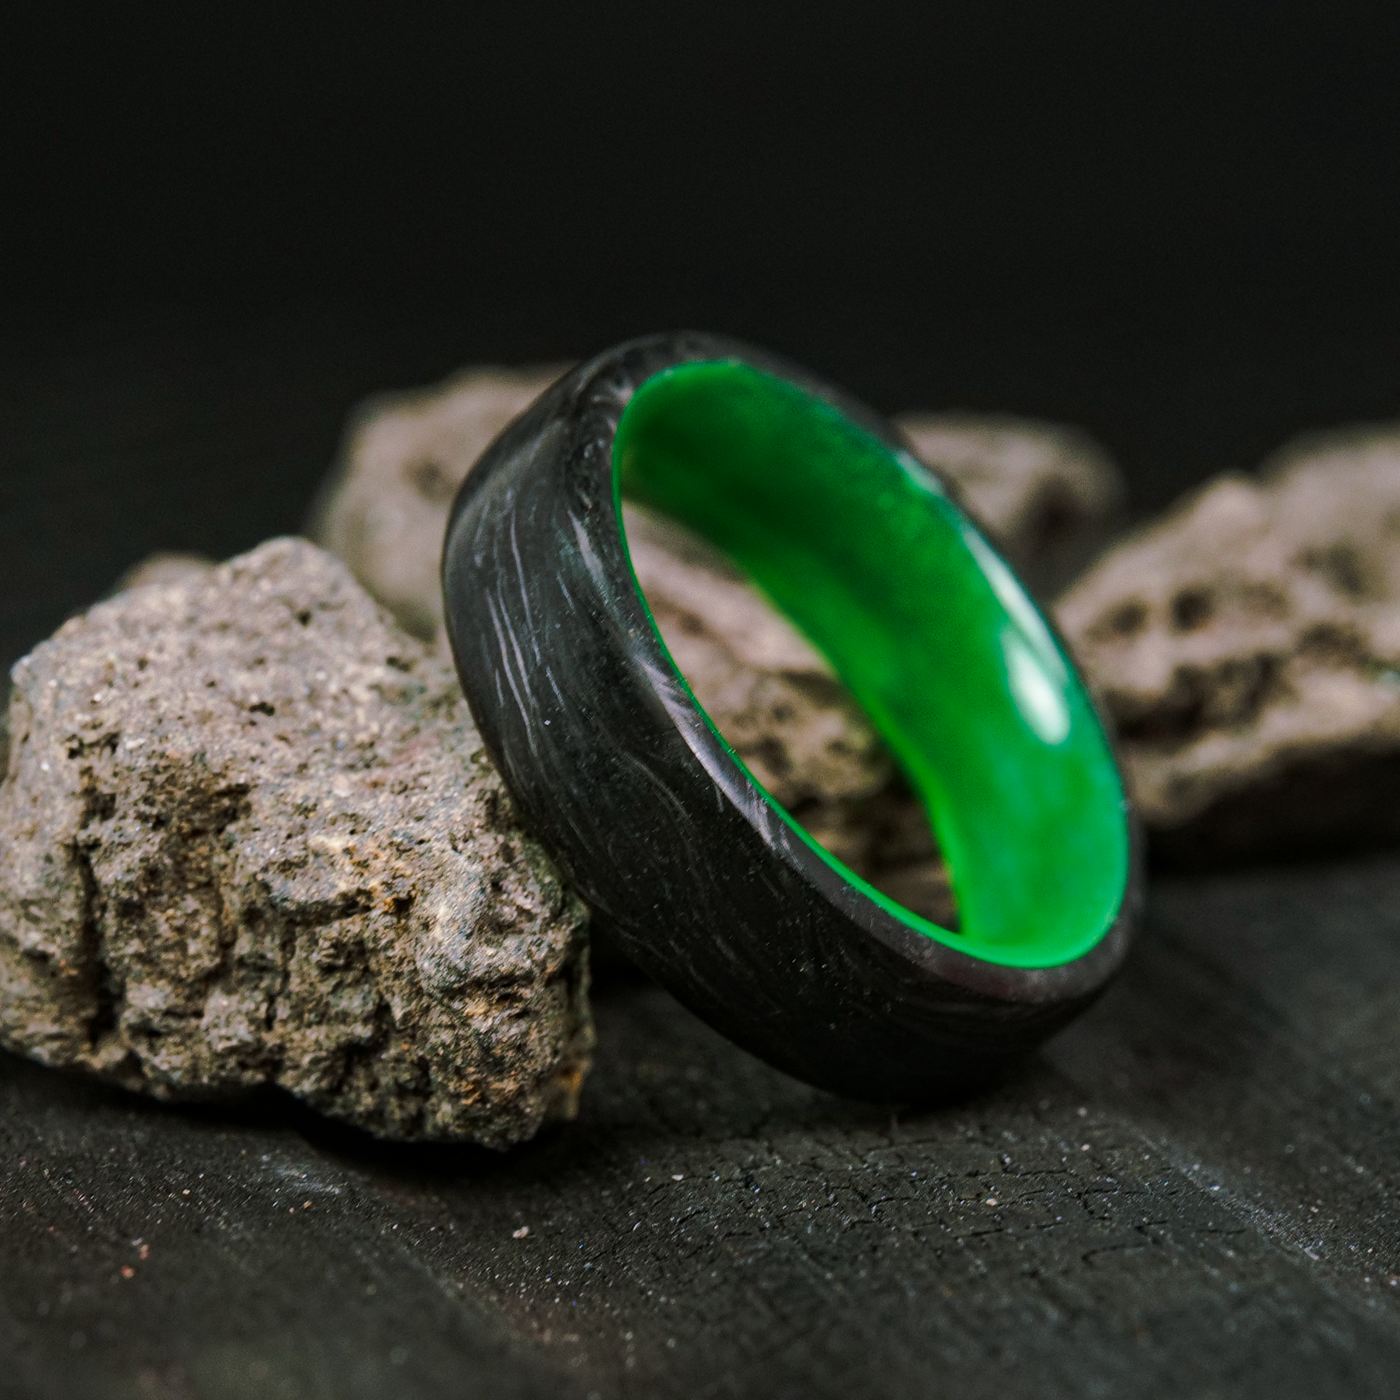 Green Glow Burl Carbon Fiber Ring with Glowing Resin Liner - Patrick Adair Designs